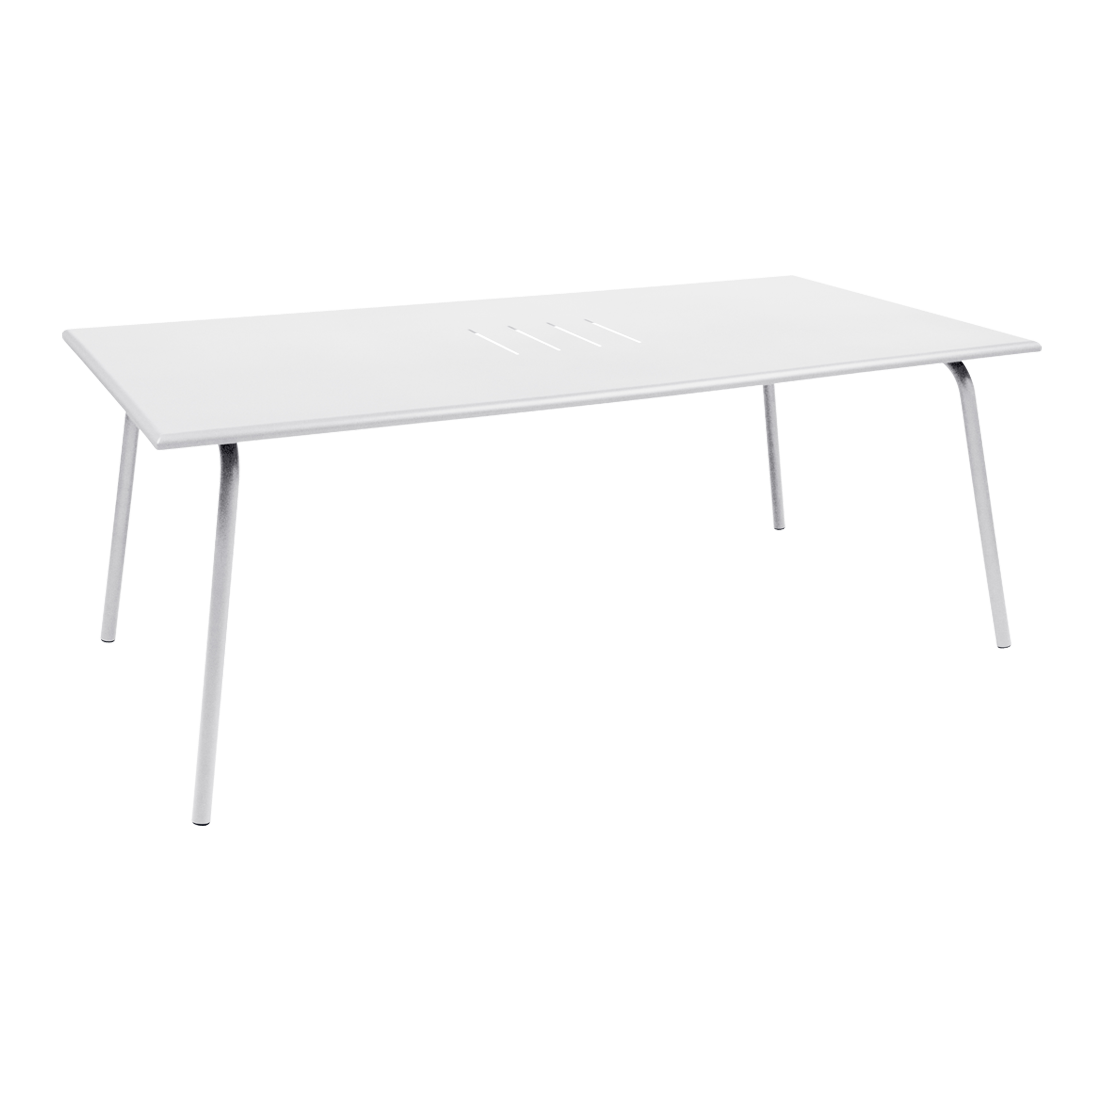 table de jardin, table metal, table rectangulaire, table 8 personnes, table banche